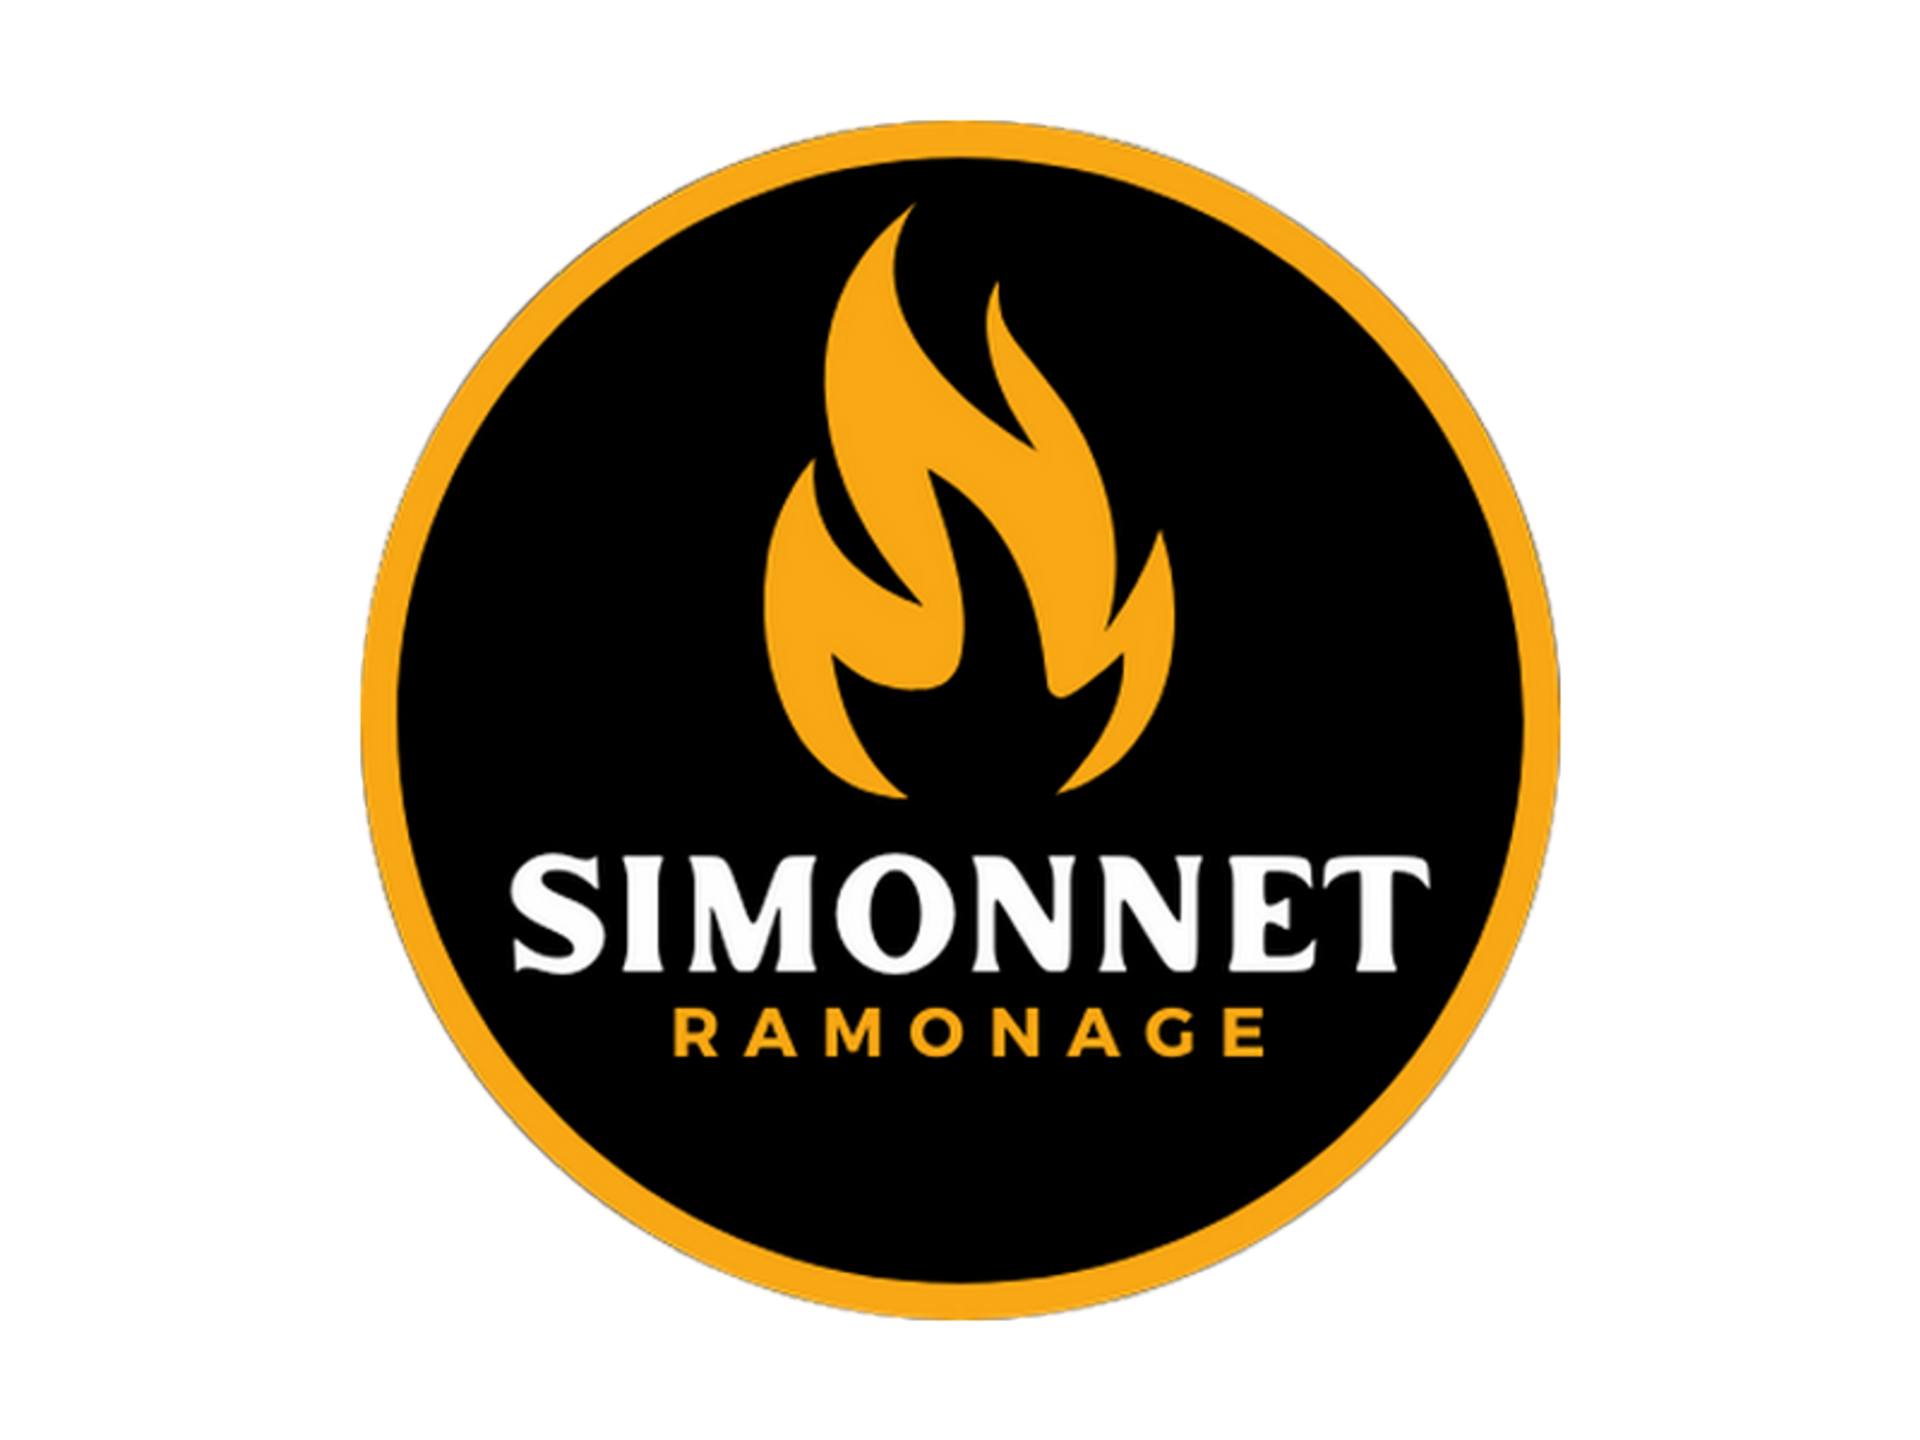 Simonnet Ramonage